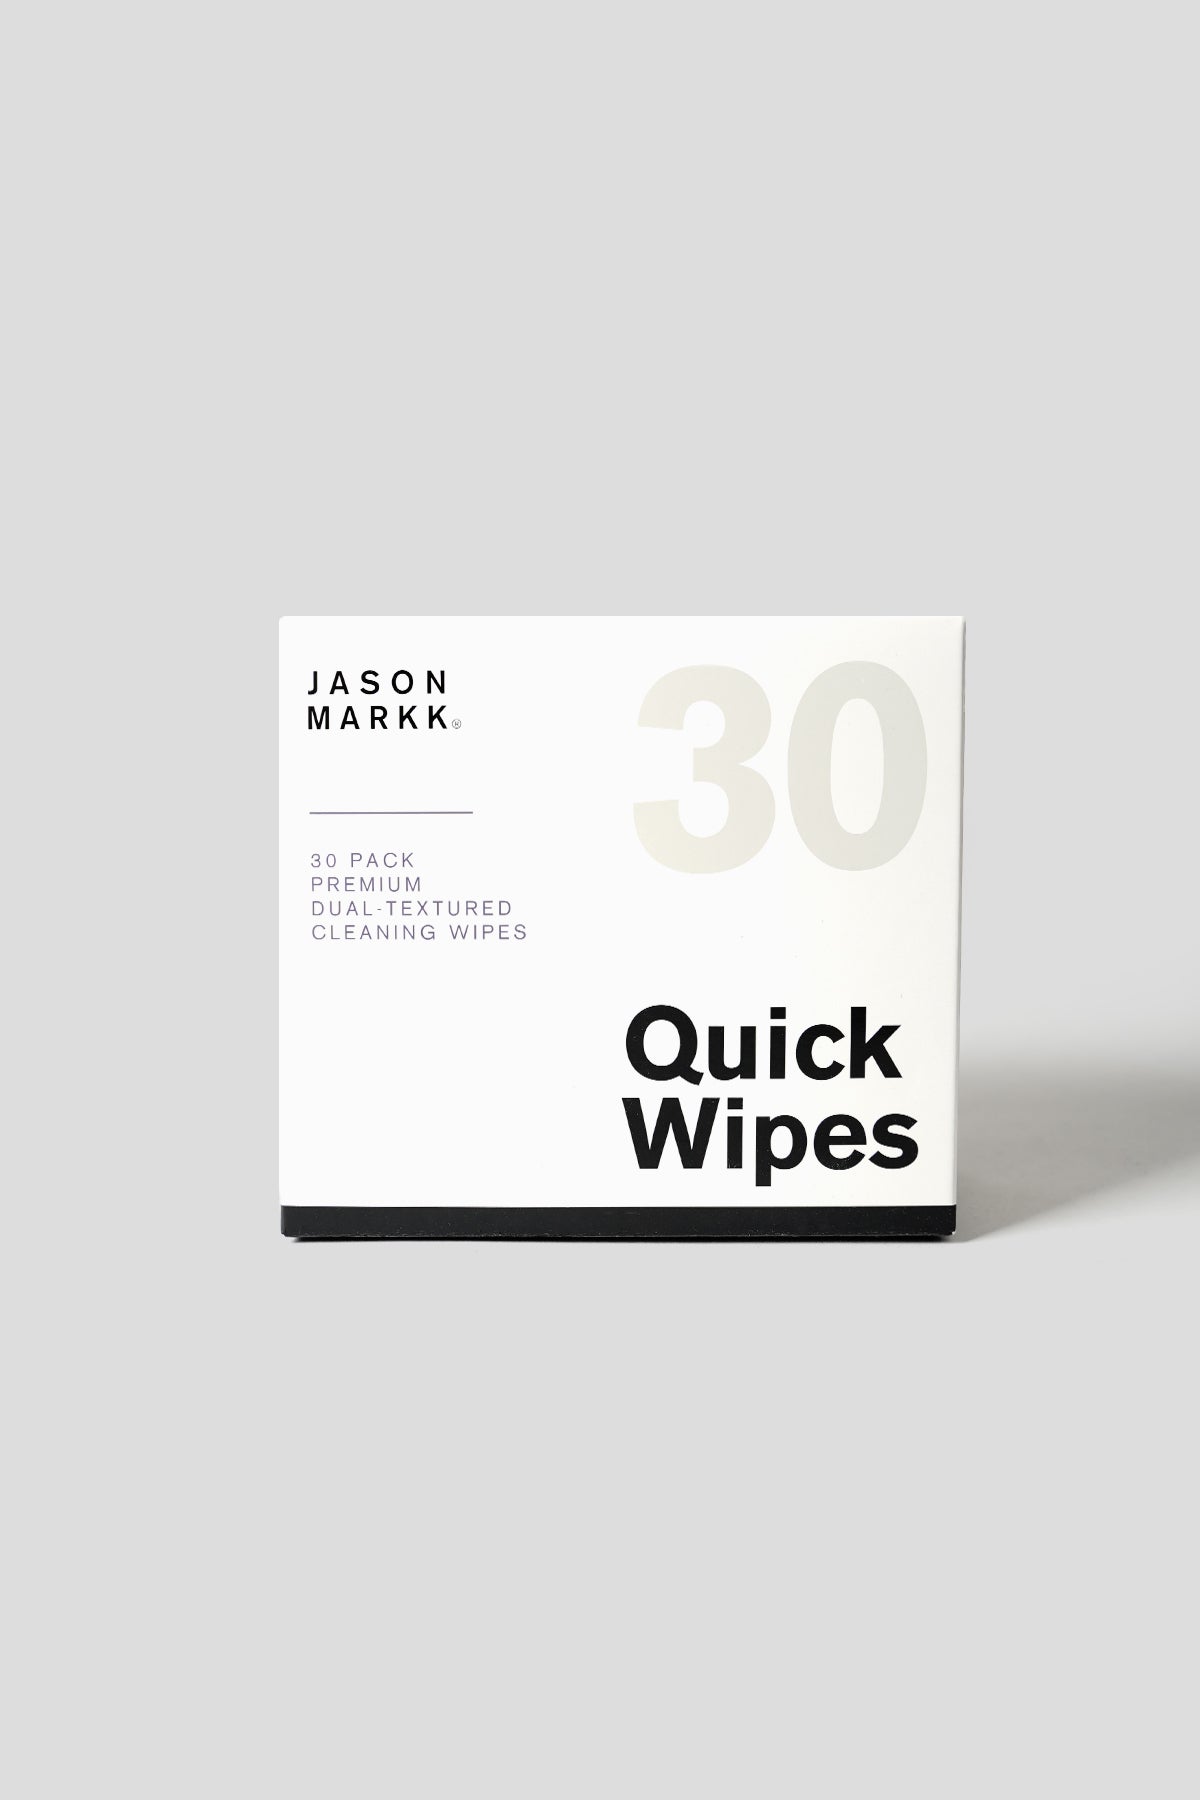 Jason Markk - QUICK WIPES X30 - LE LABO STORE